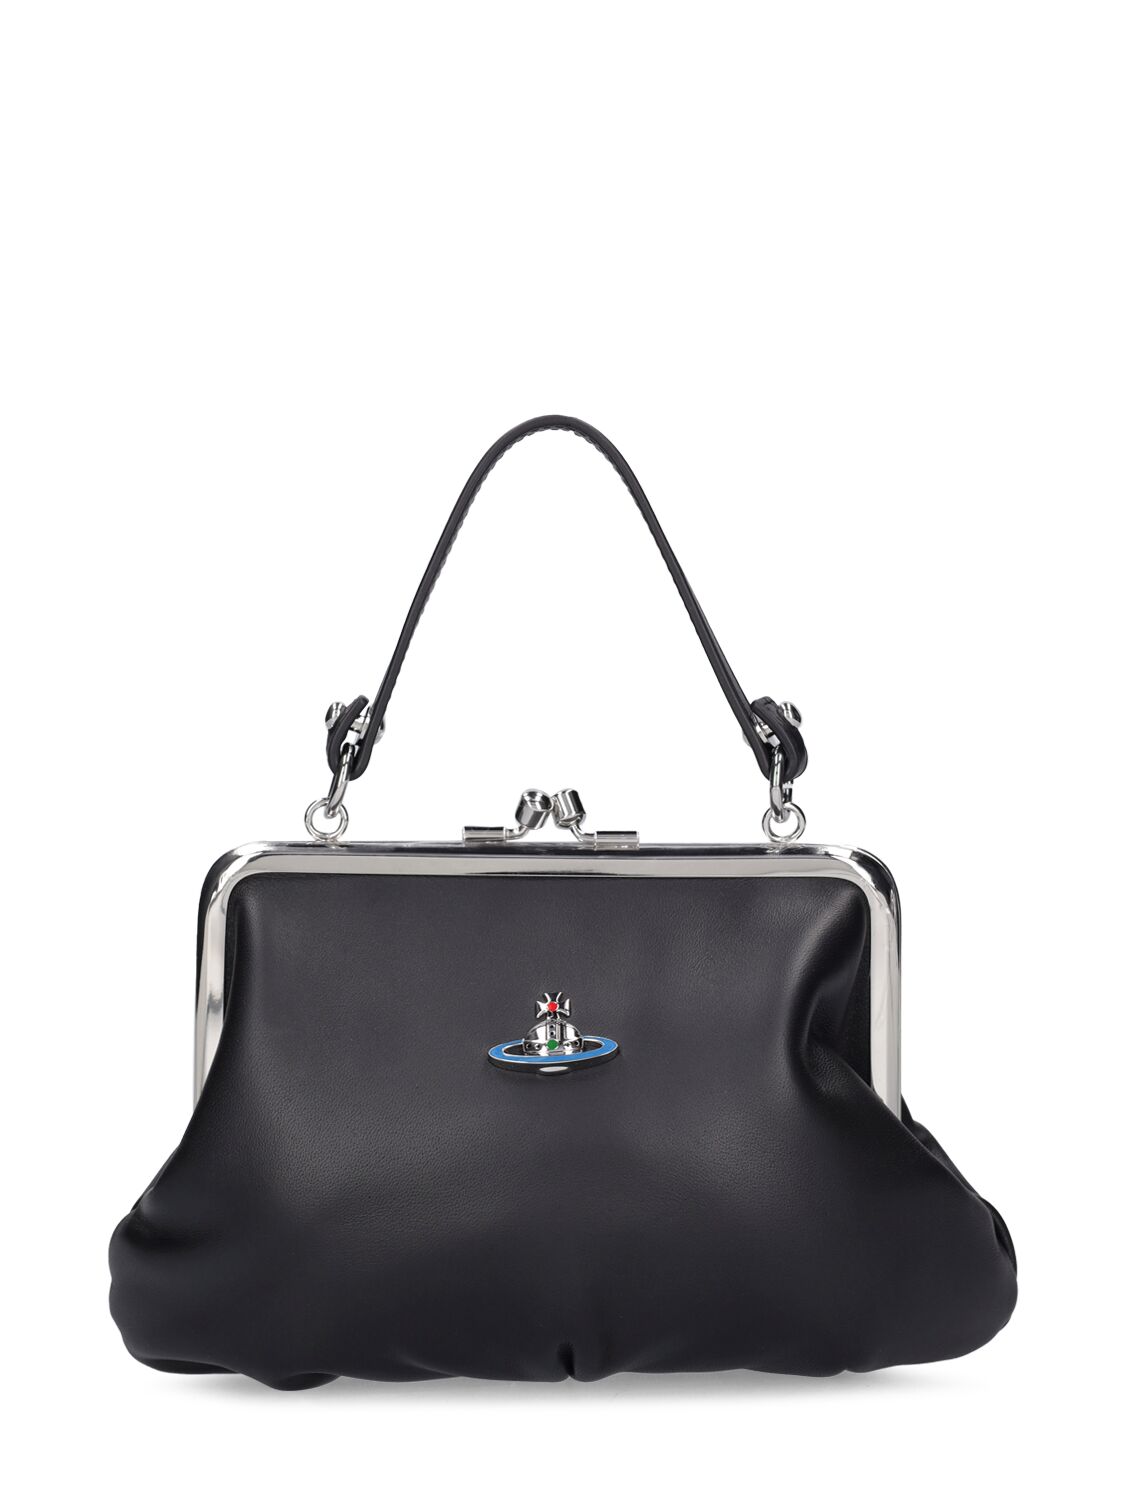 Vivienne Westwood Granny Frame Leather Top Handle Bag In Black